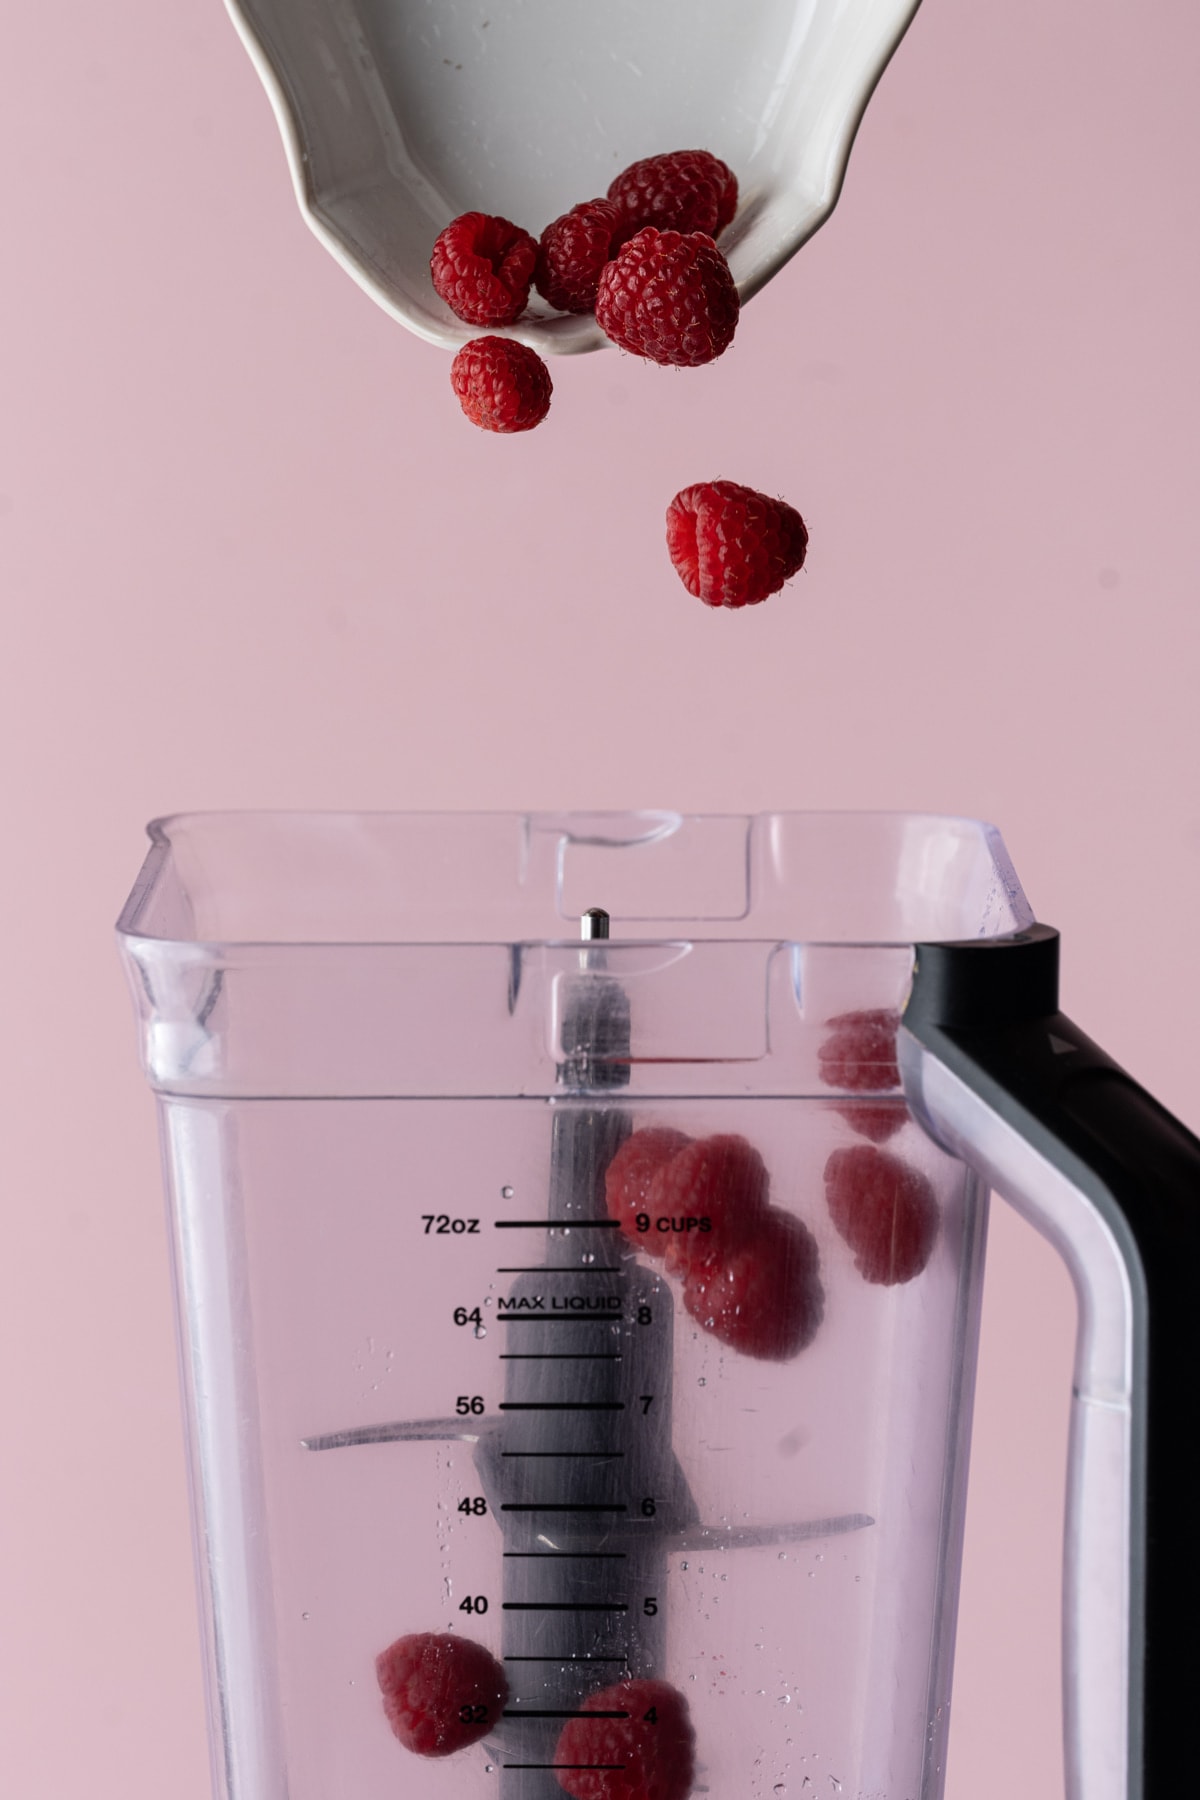 Adding raspberries to a blender